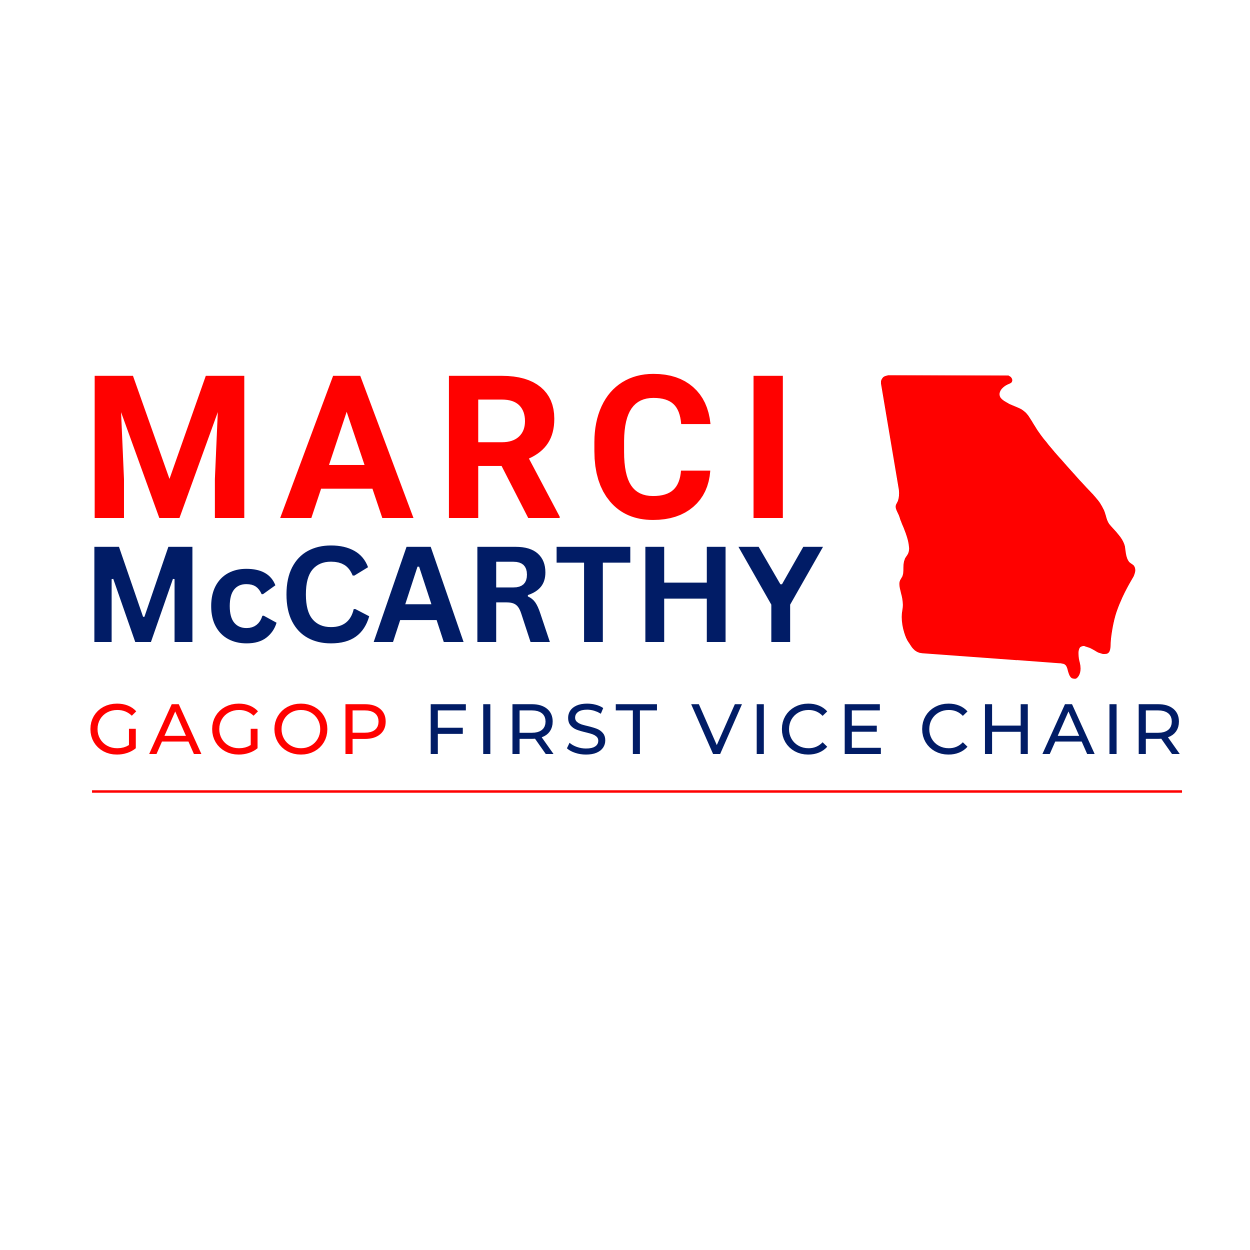 Marci mccarthy gagop first vice chairman logo final